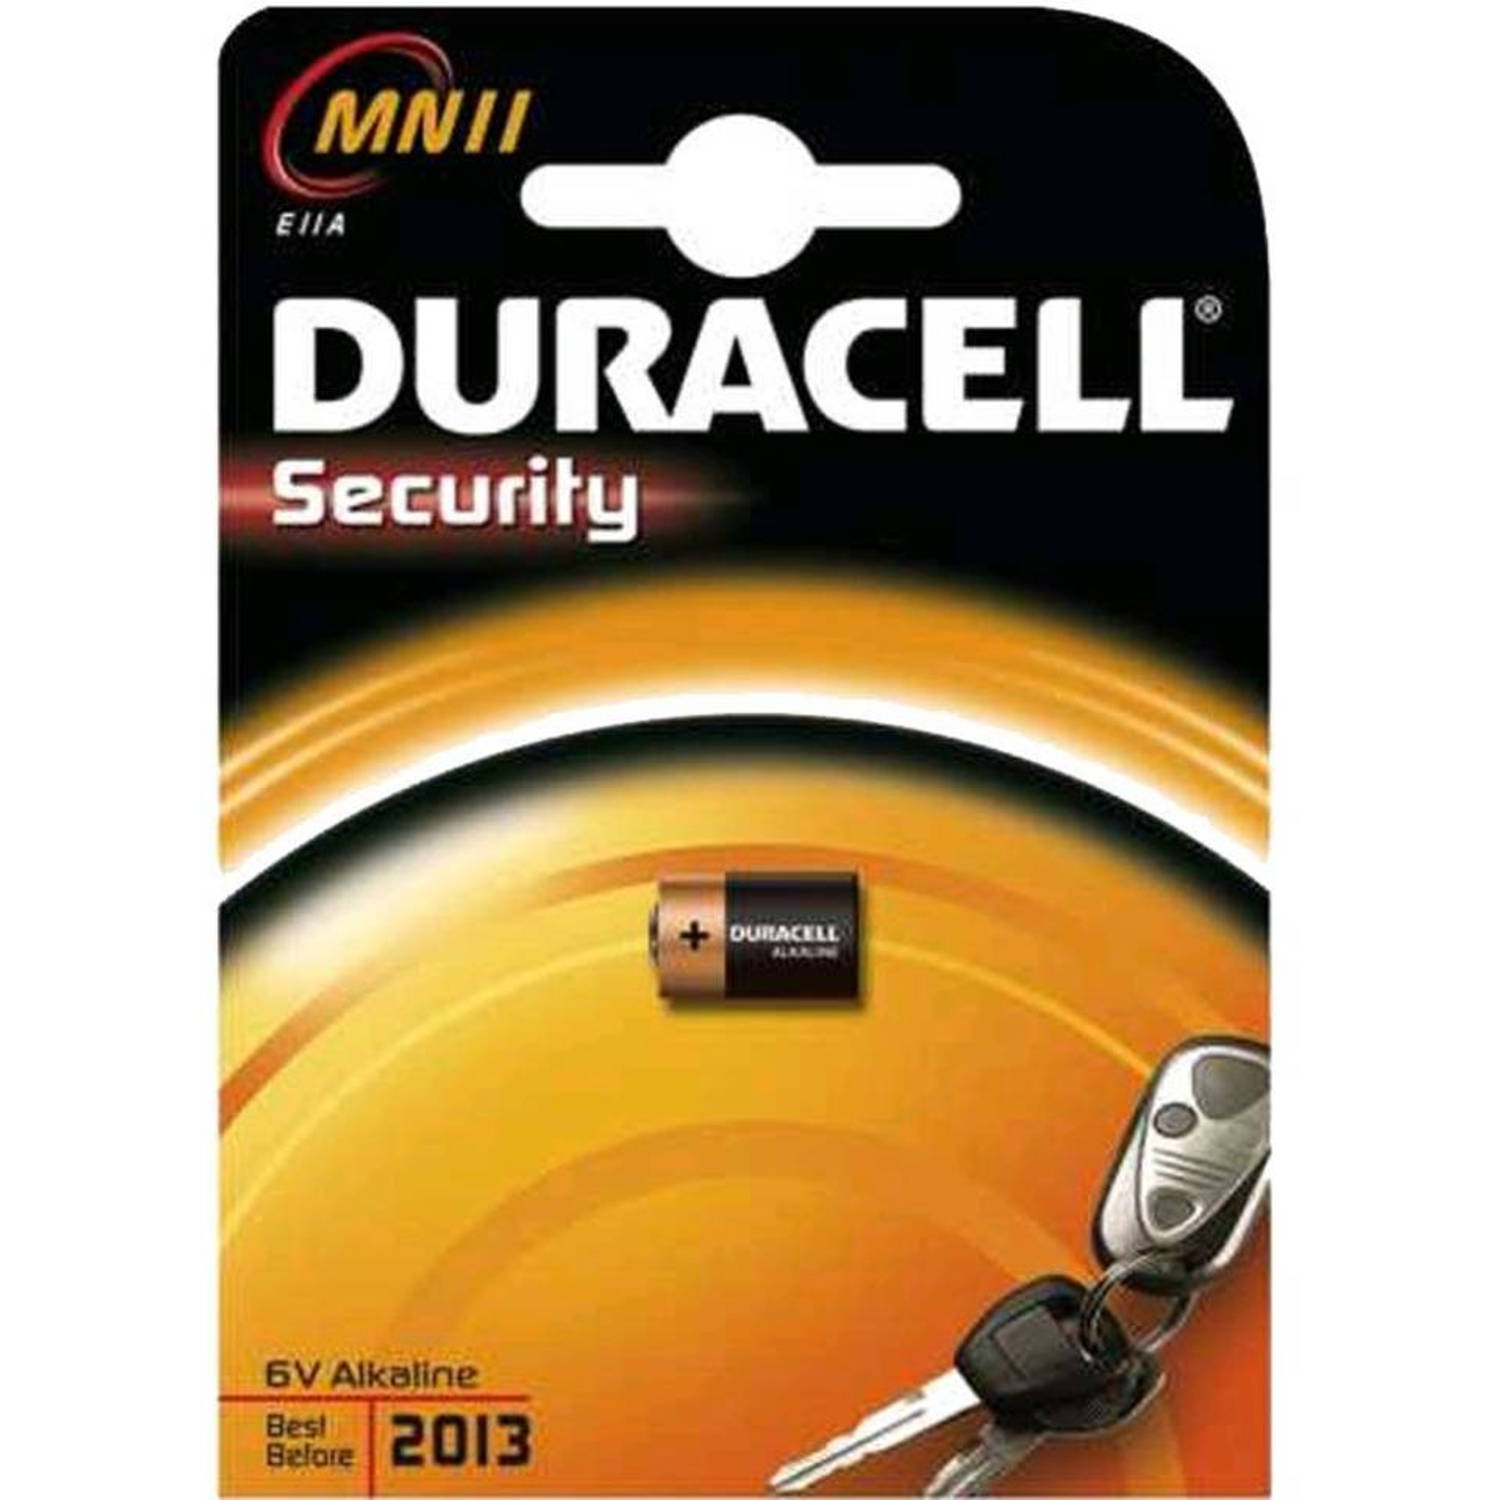 Duracell Batterij Security Mn11 (1 Per Blister)